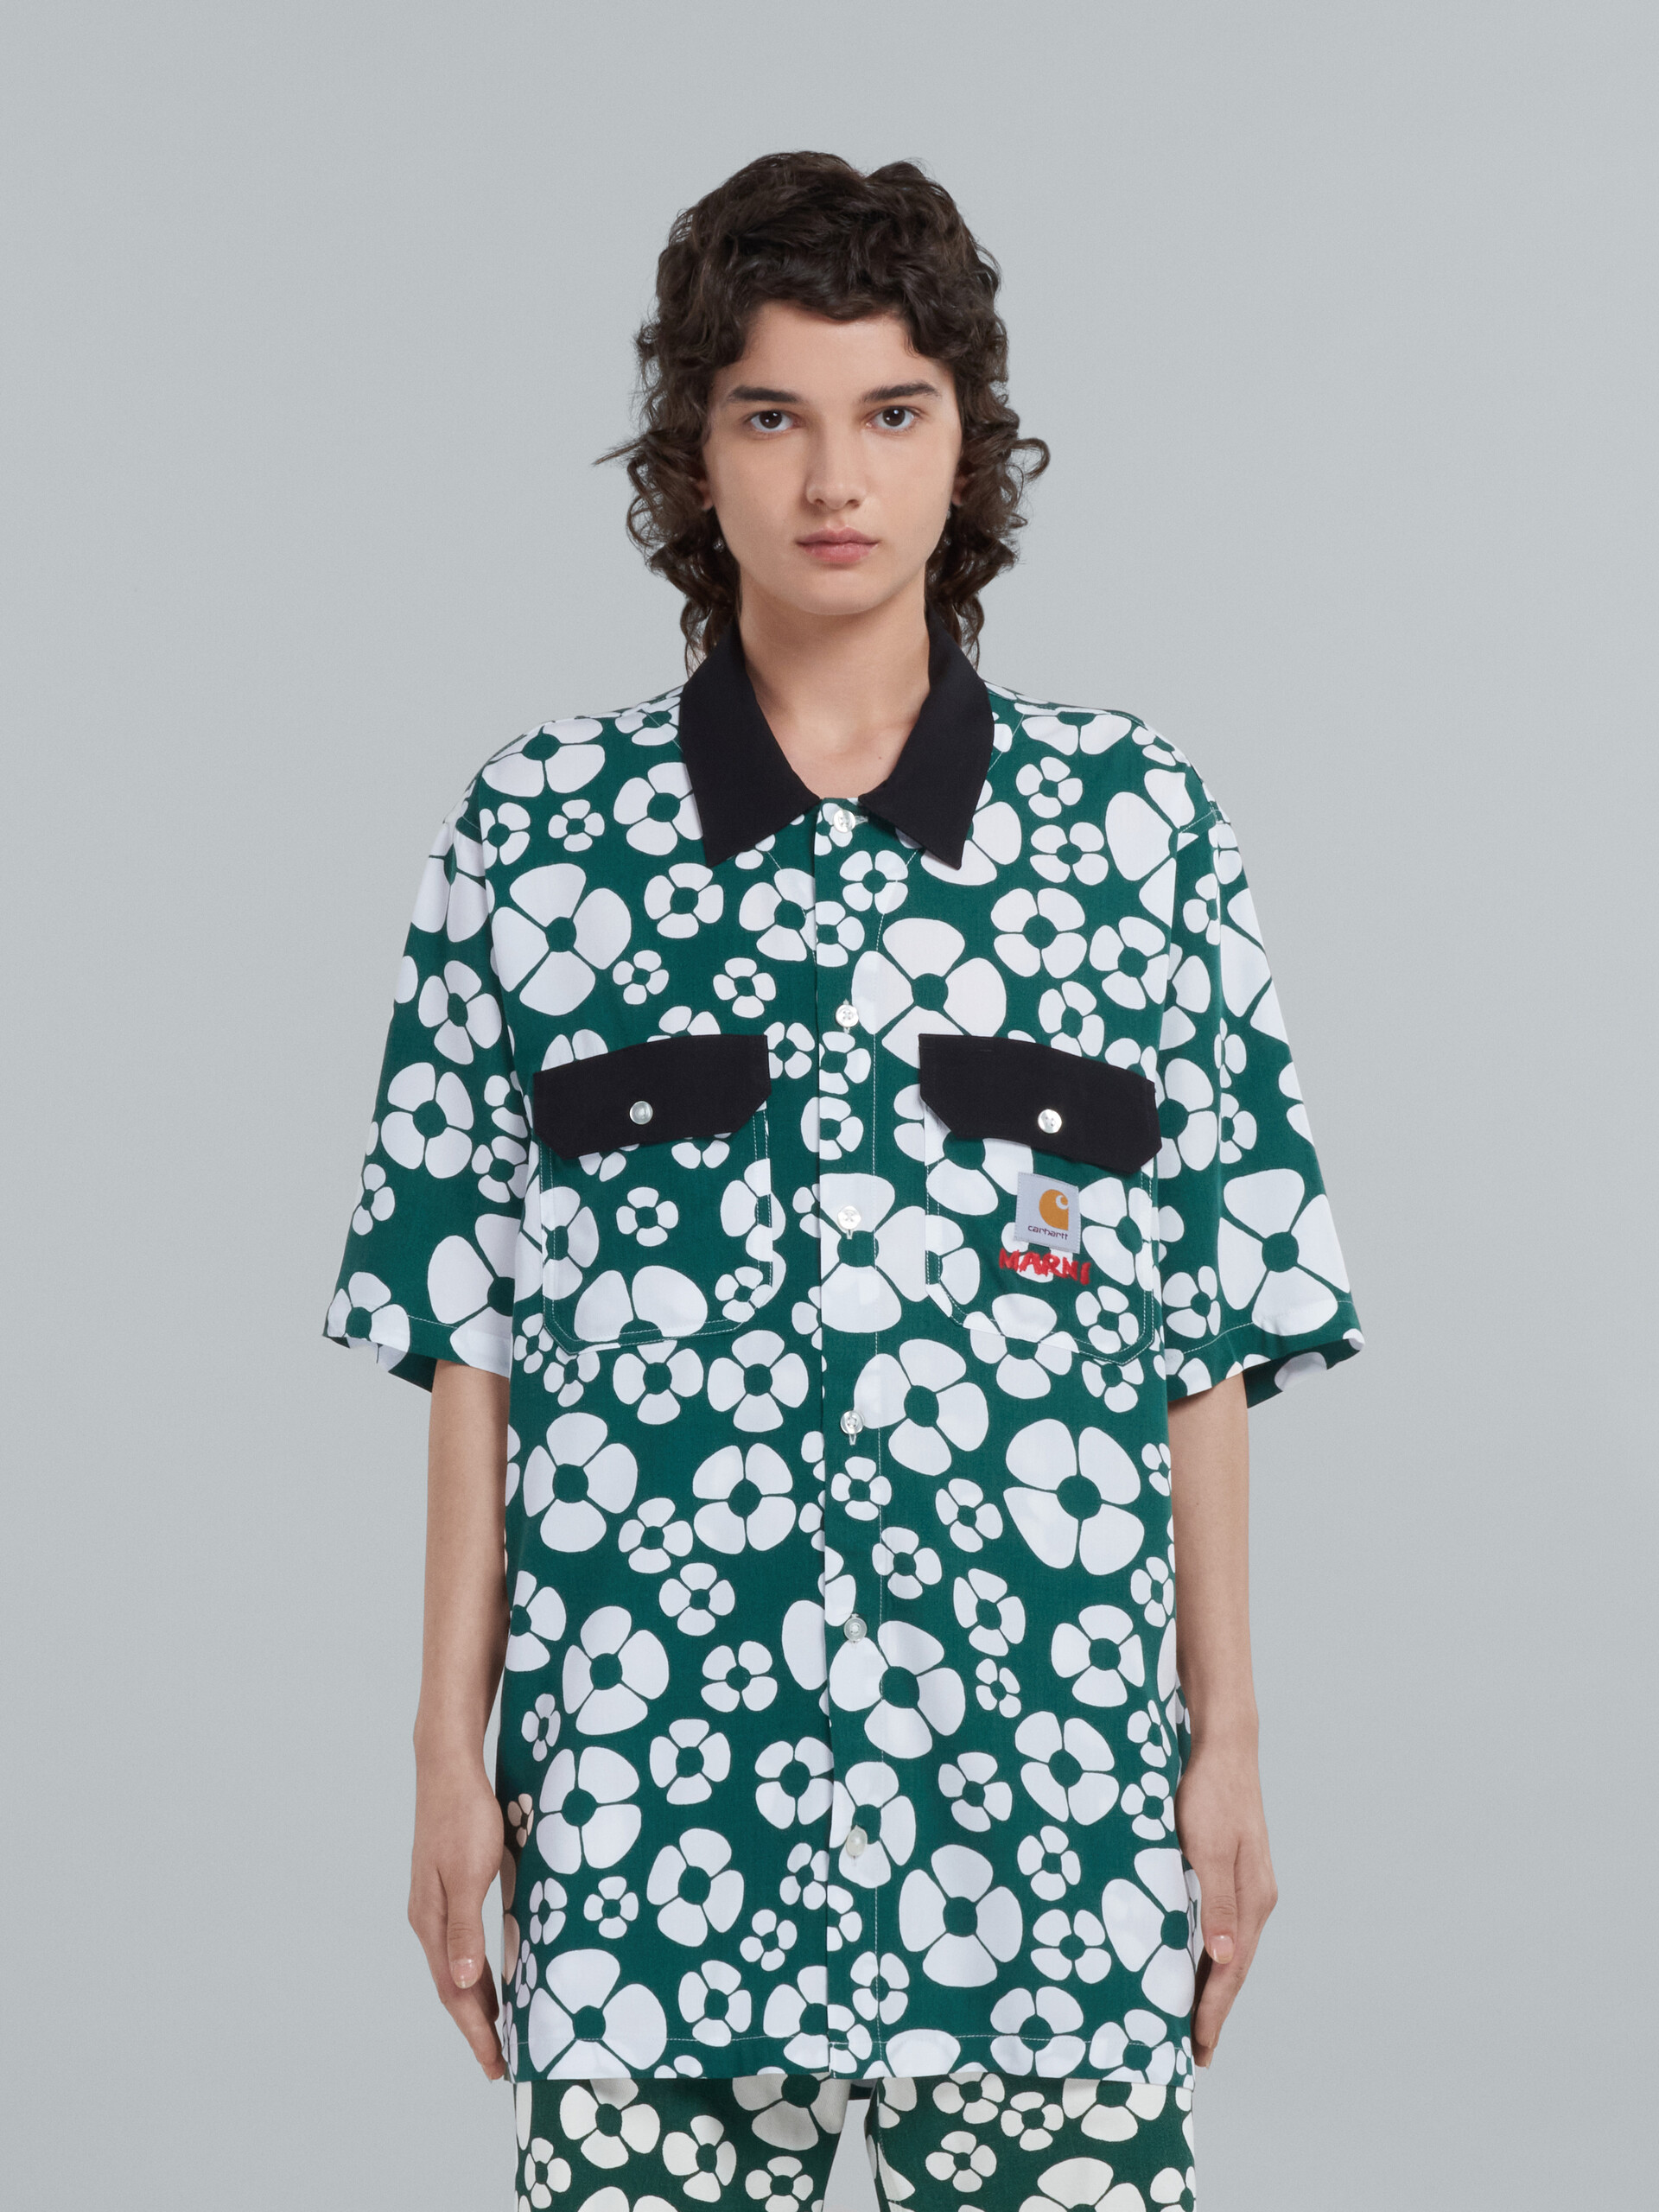 MARNI x CARHARTT WIP - Camiseta floral verde de manga corta - Camisas - Image 2